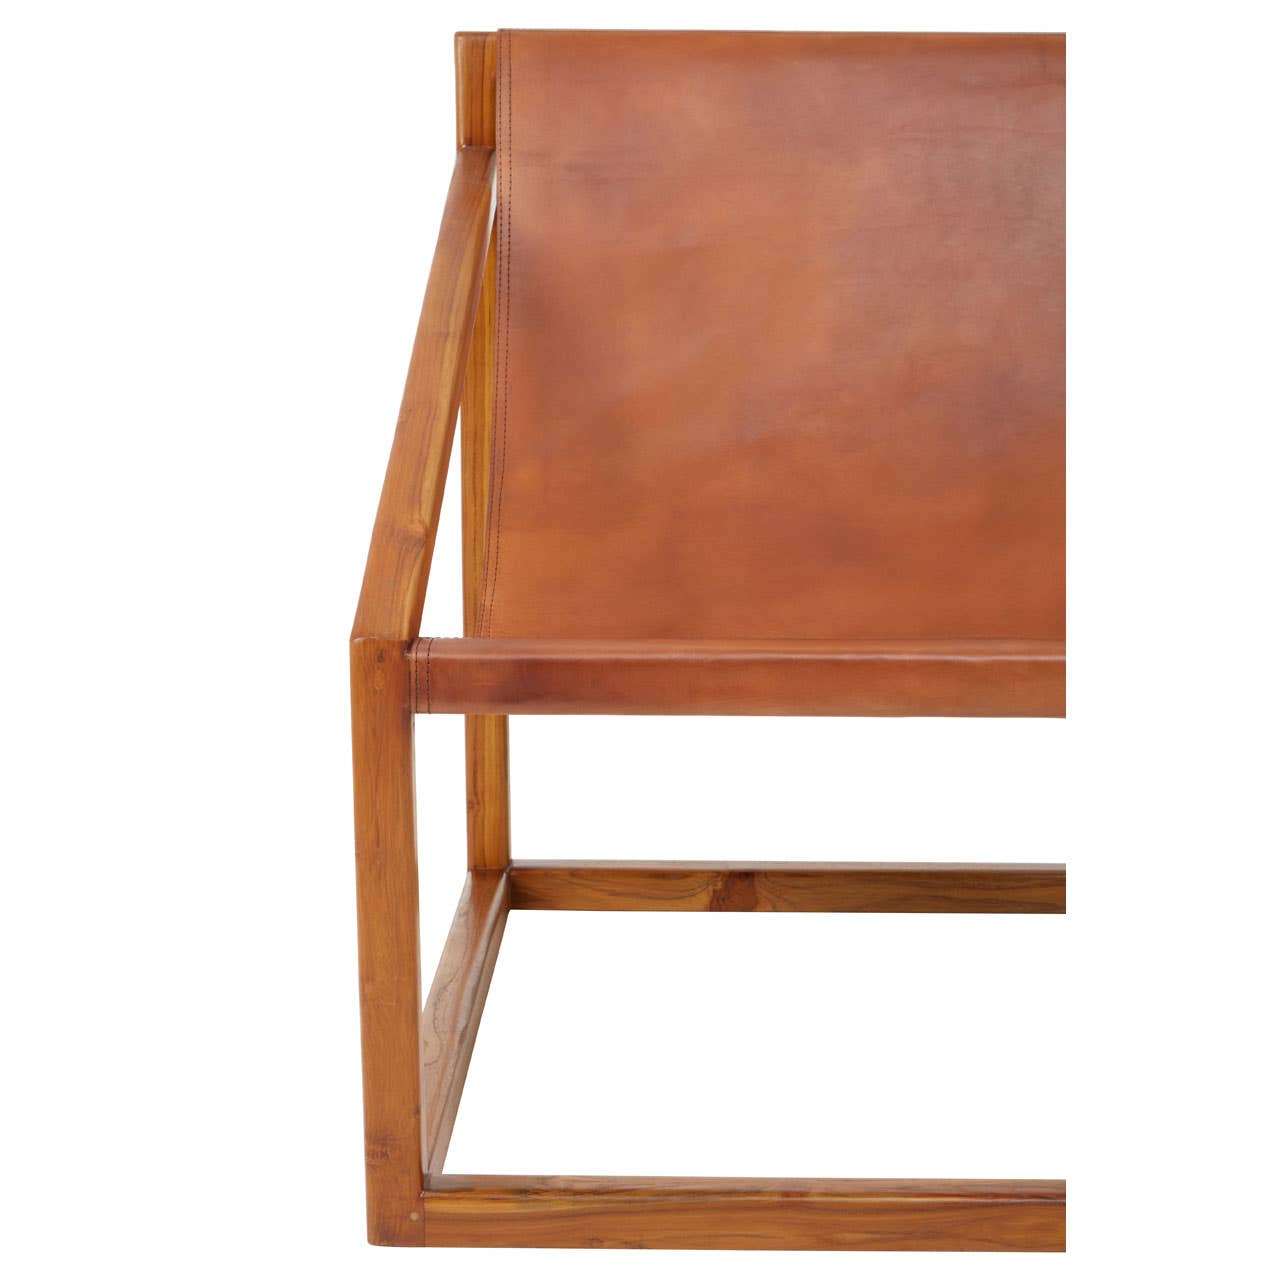 Noosa & Co. Living Kendari Brown Cubic Frame Chair House of Isabella UK